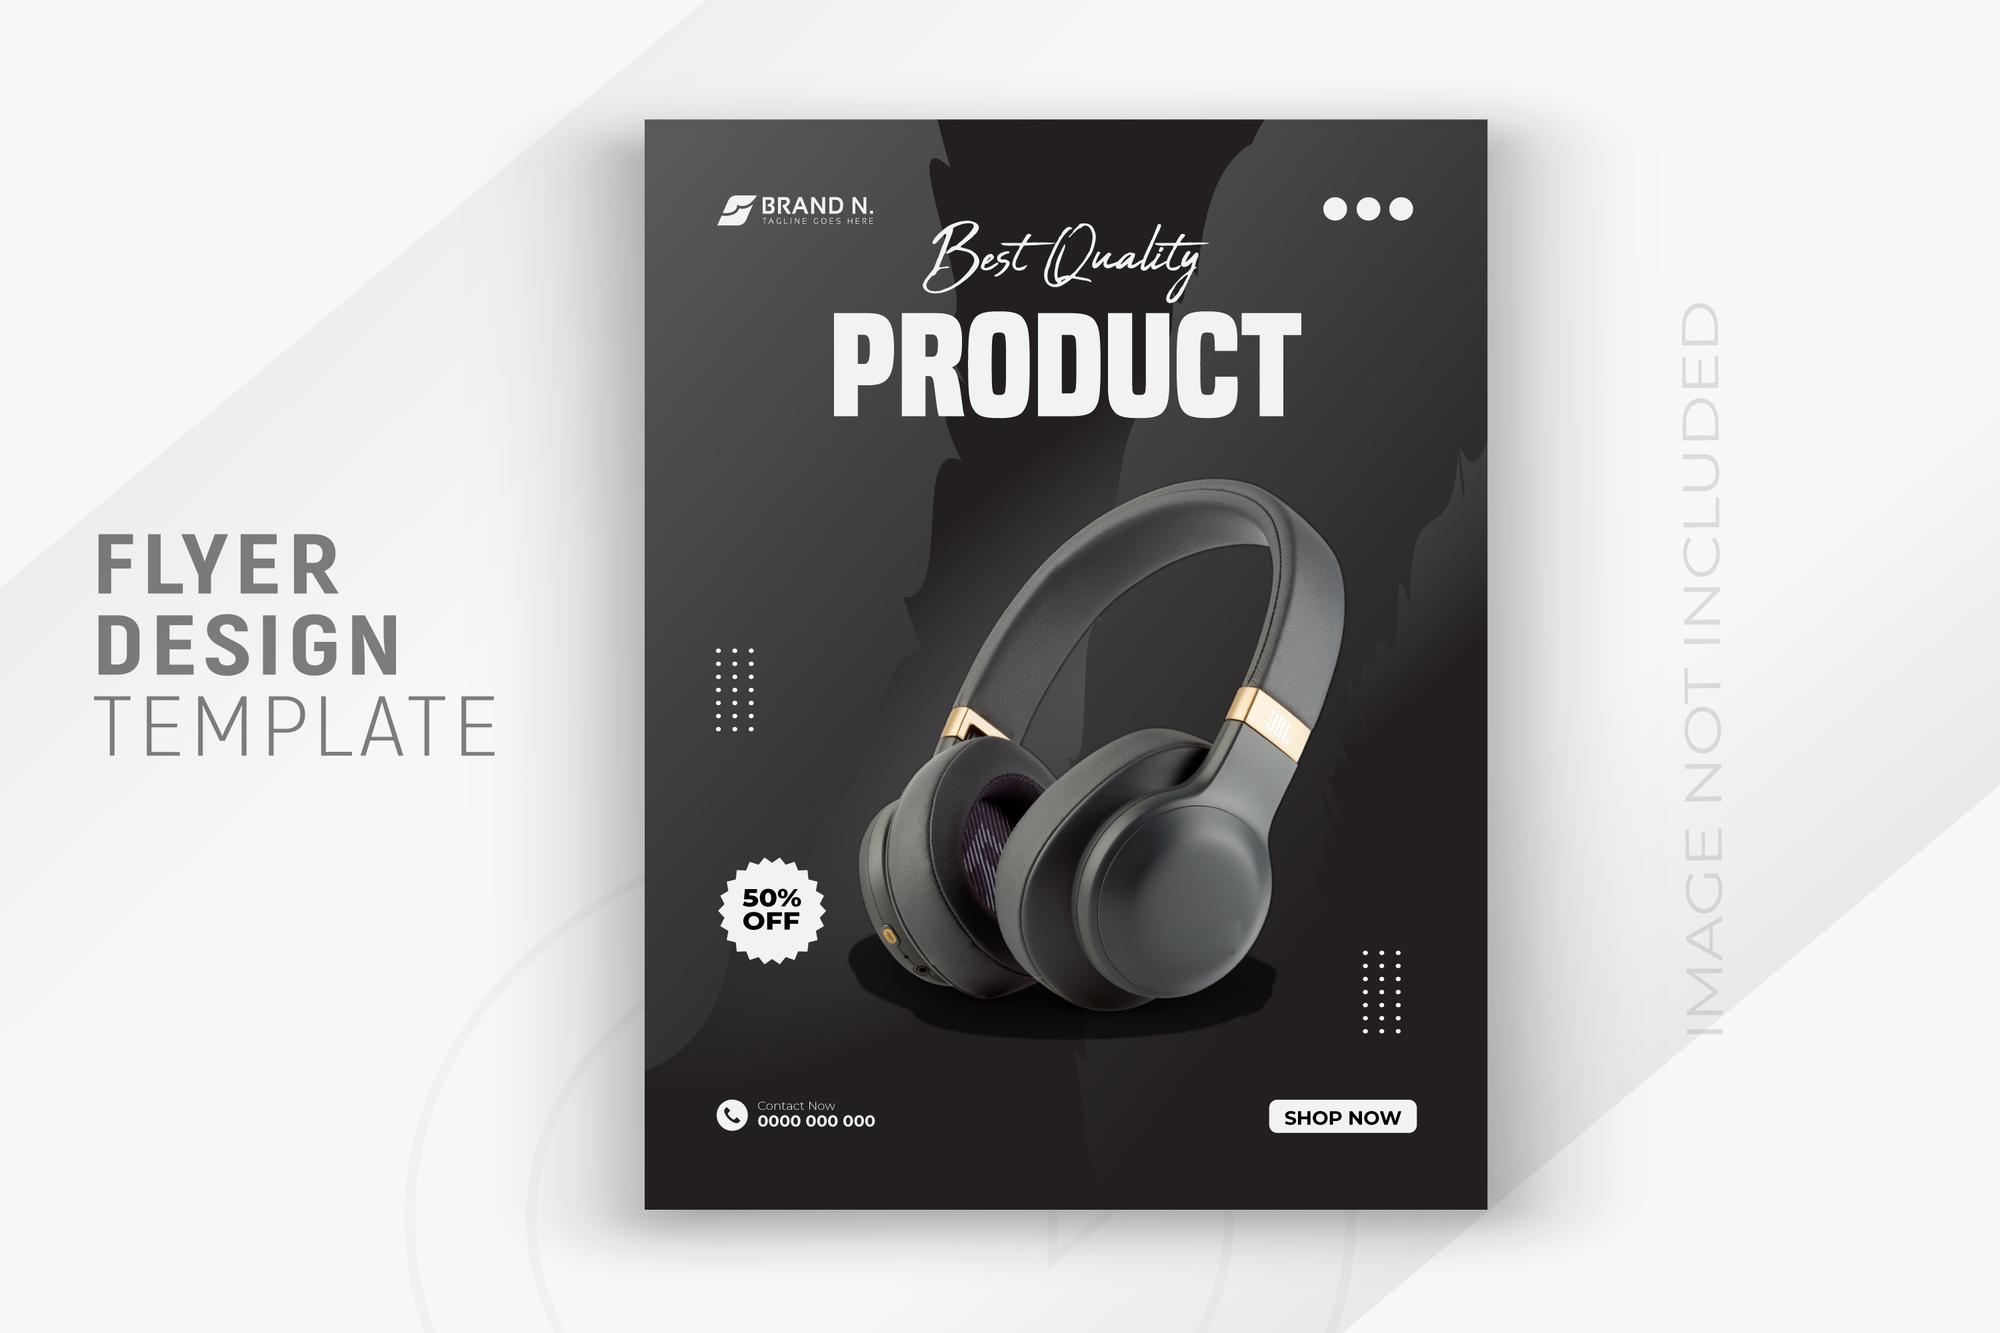 Dj Headphone brand product flyer social media banner design template